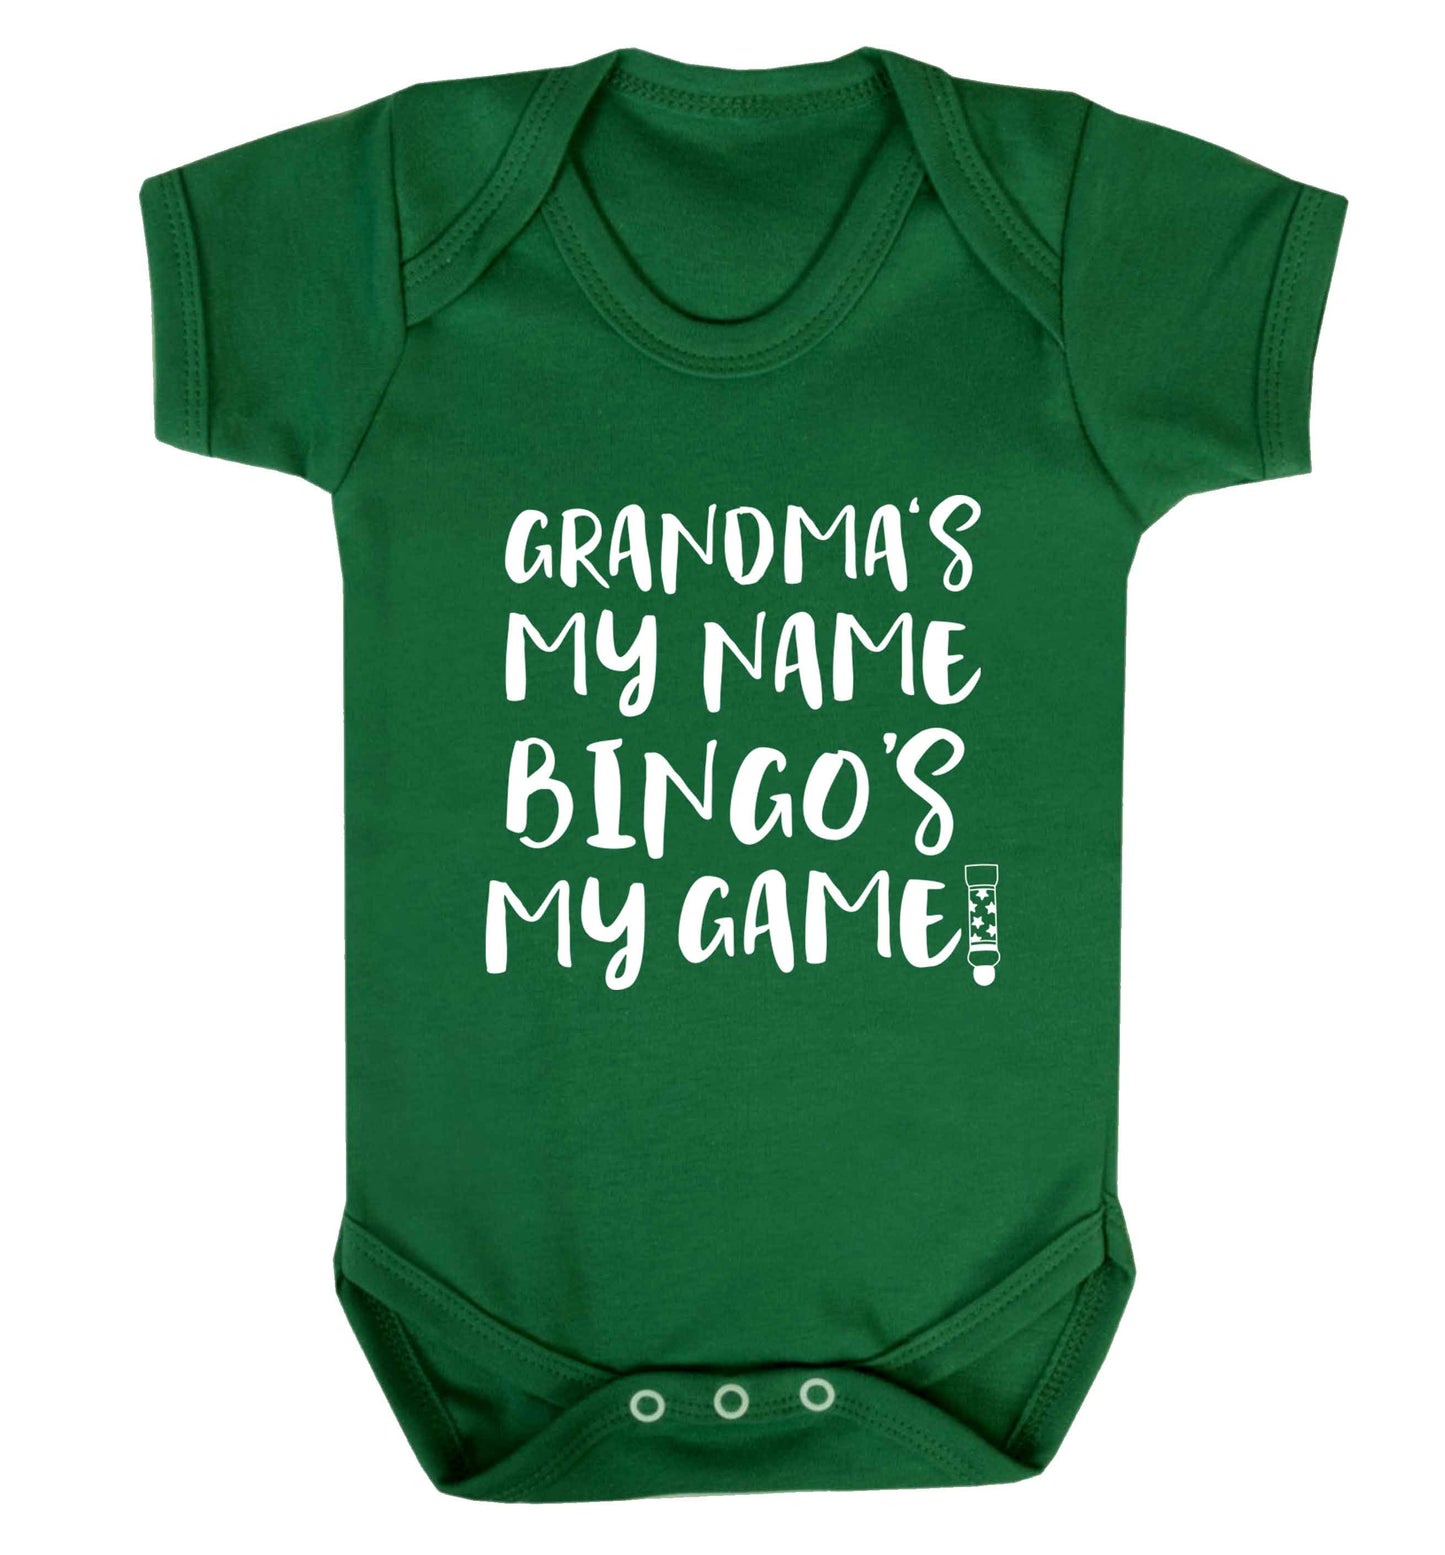 Grandma's my name bingo's my game! Baby Vest green 18-24 months